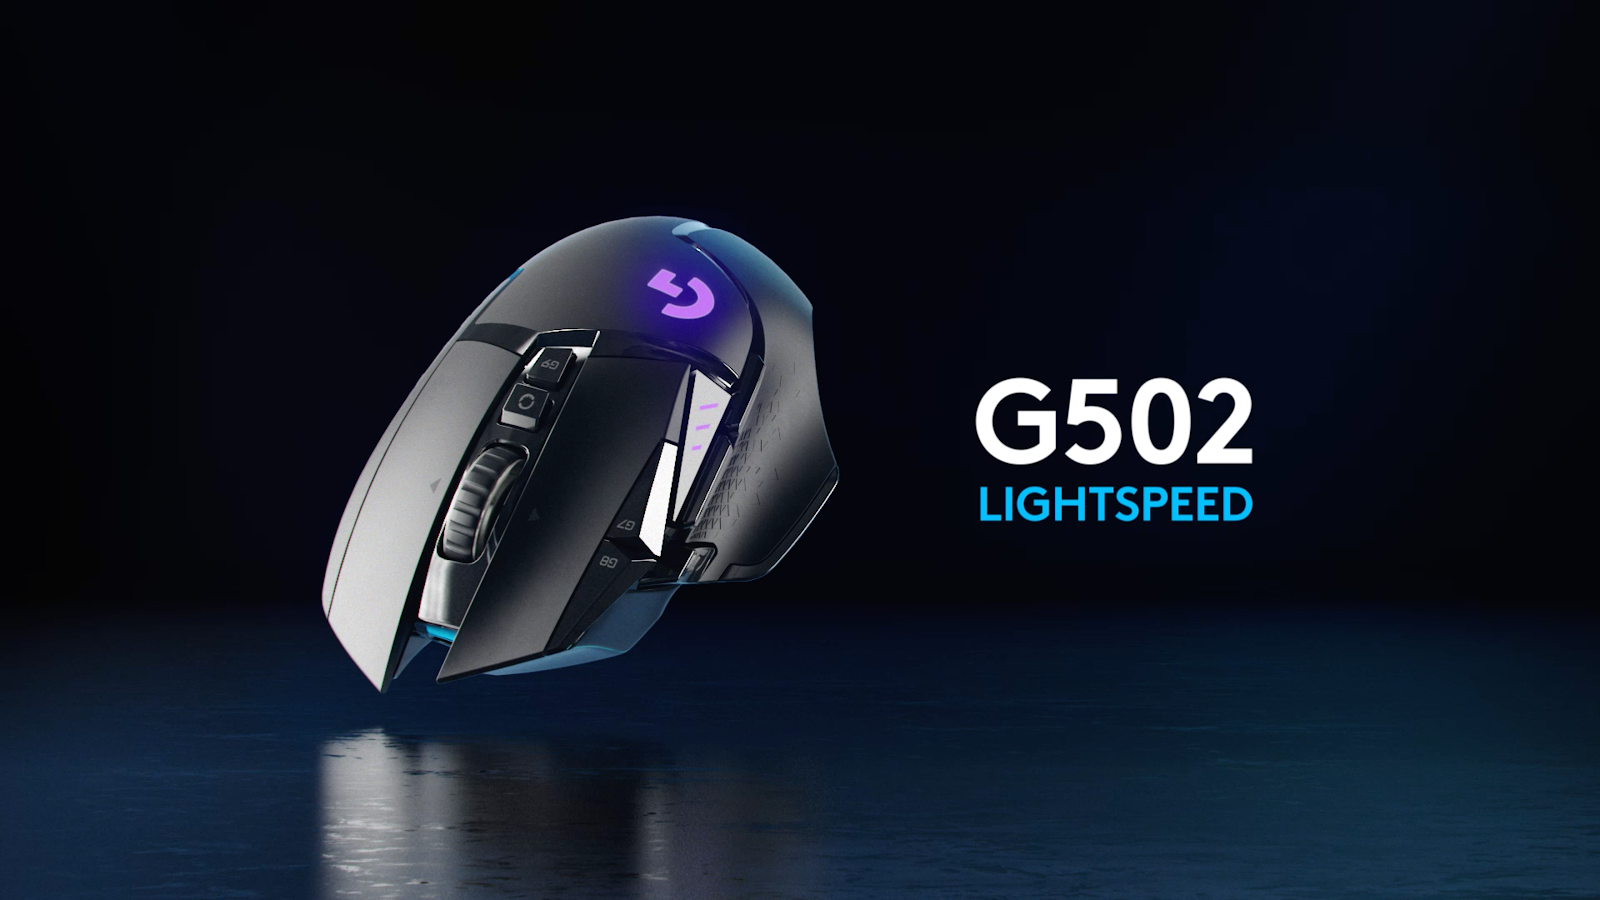 Play at LIGHTSPEED Presenting the Logitech G502 LIGHTSPEED Wireless Gaming Mouse | logi BLOG